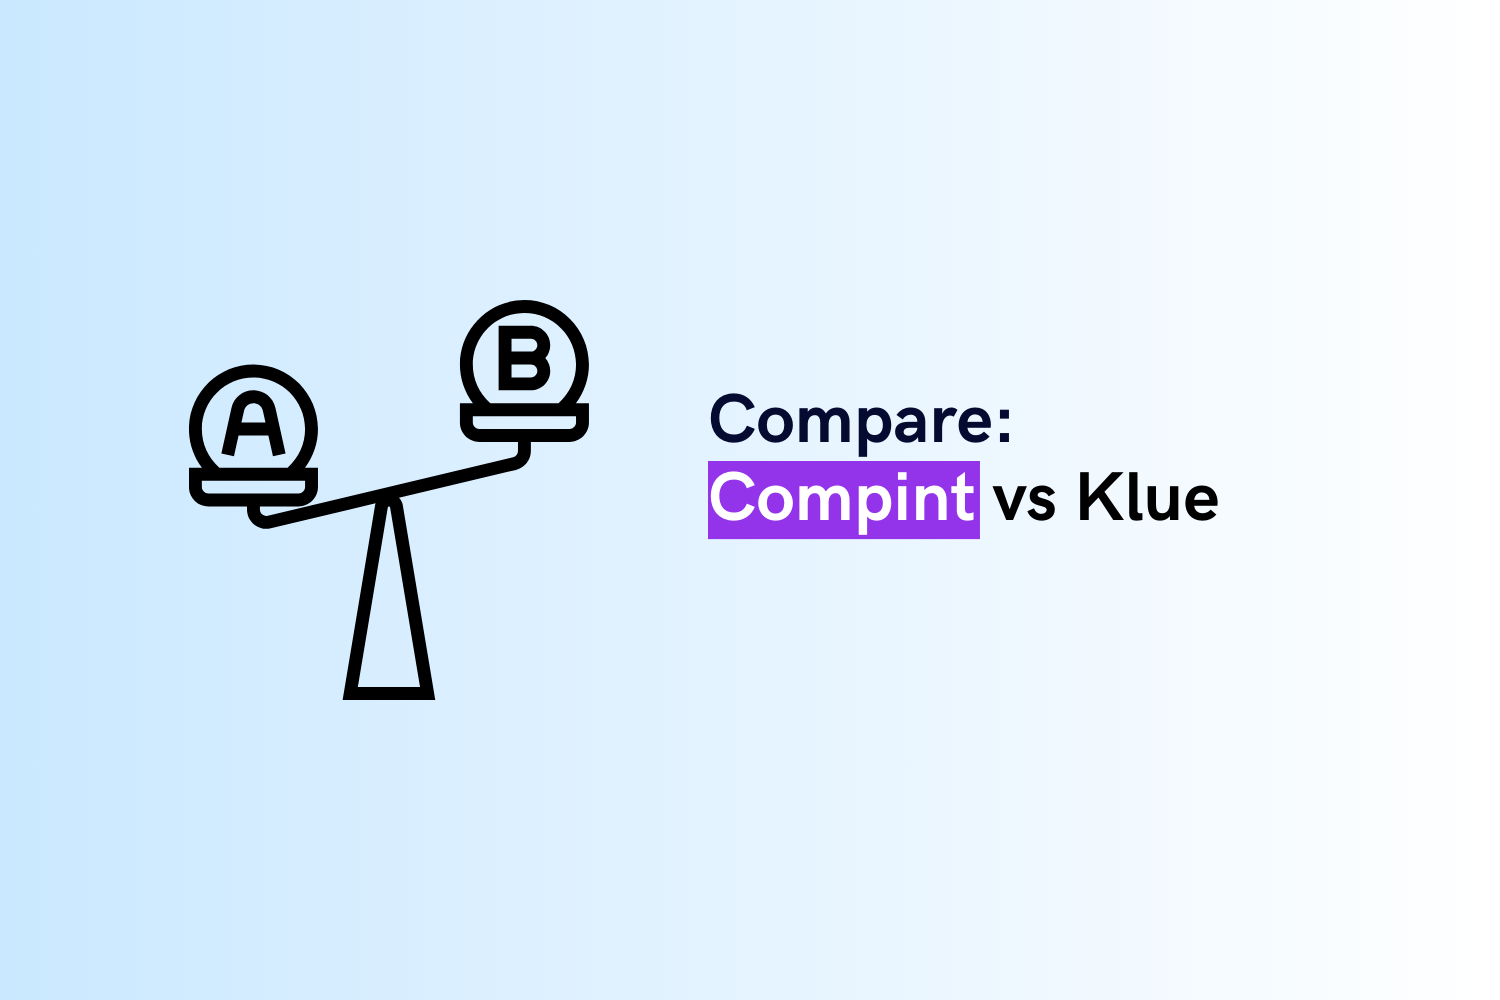 Compint vs Klue